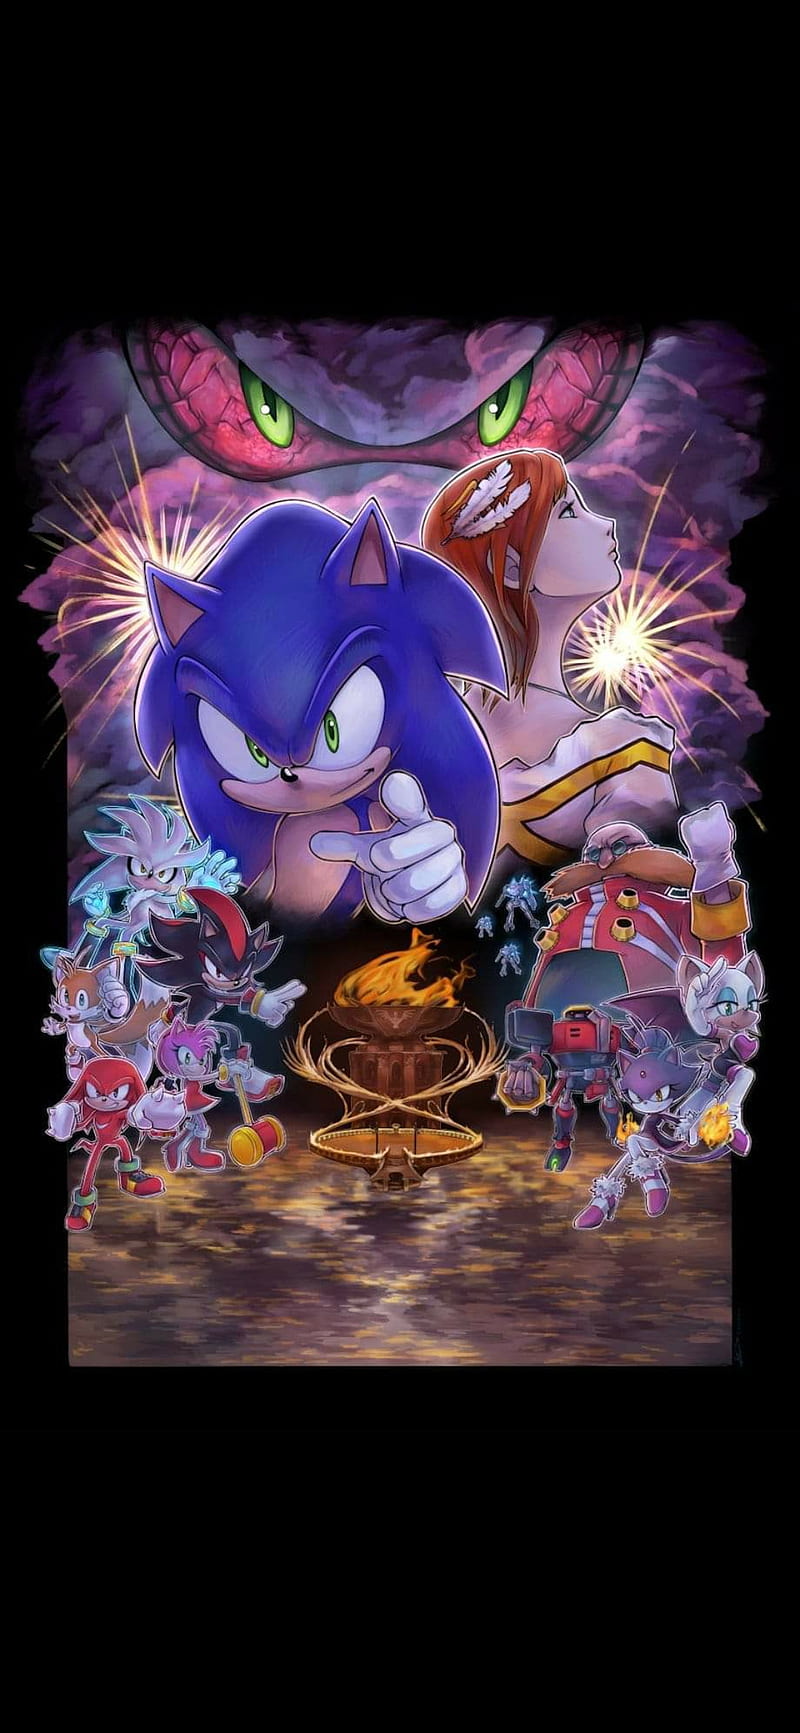 Sonic The Hedgehog 06  Wallpaper by SonicTheHedgehogBG on DeviantArt